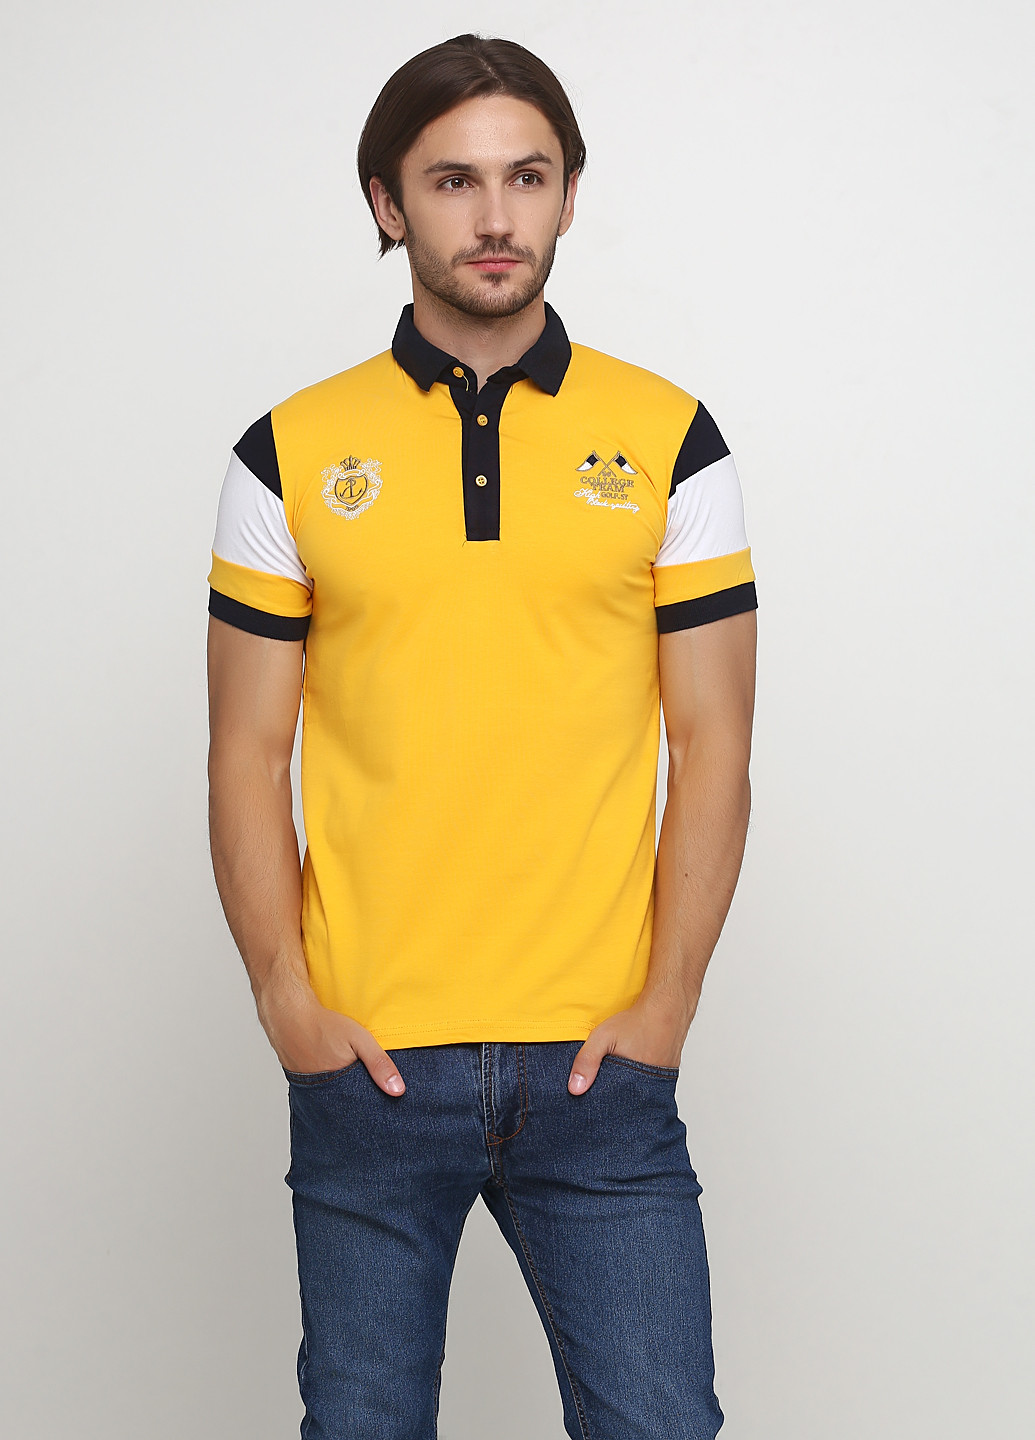 Желтая футболка-поло для мужчин Golf однотонная